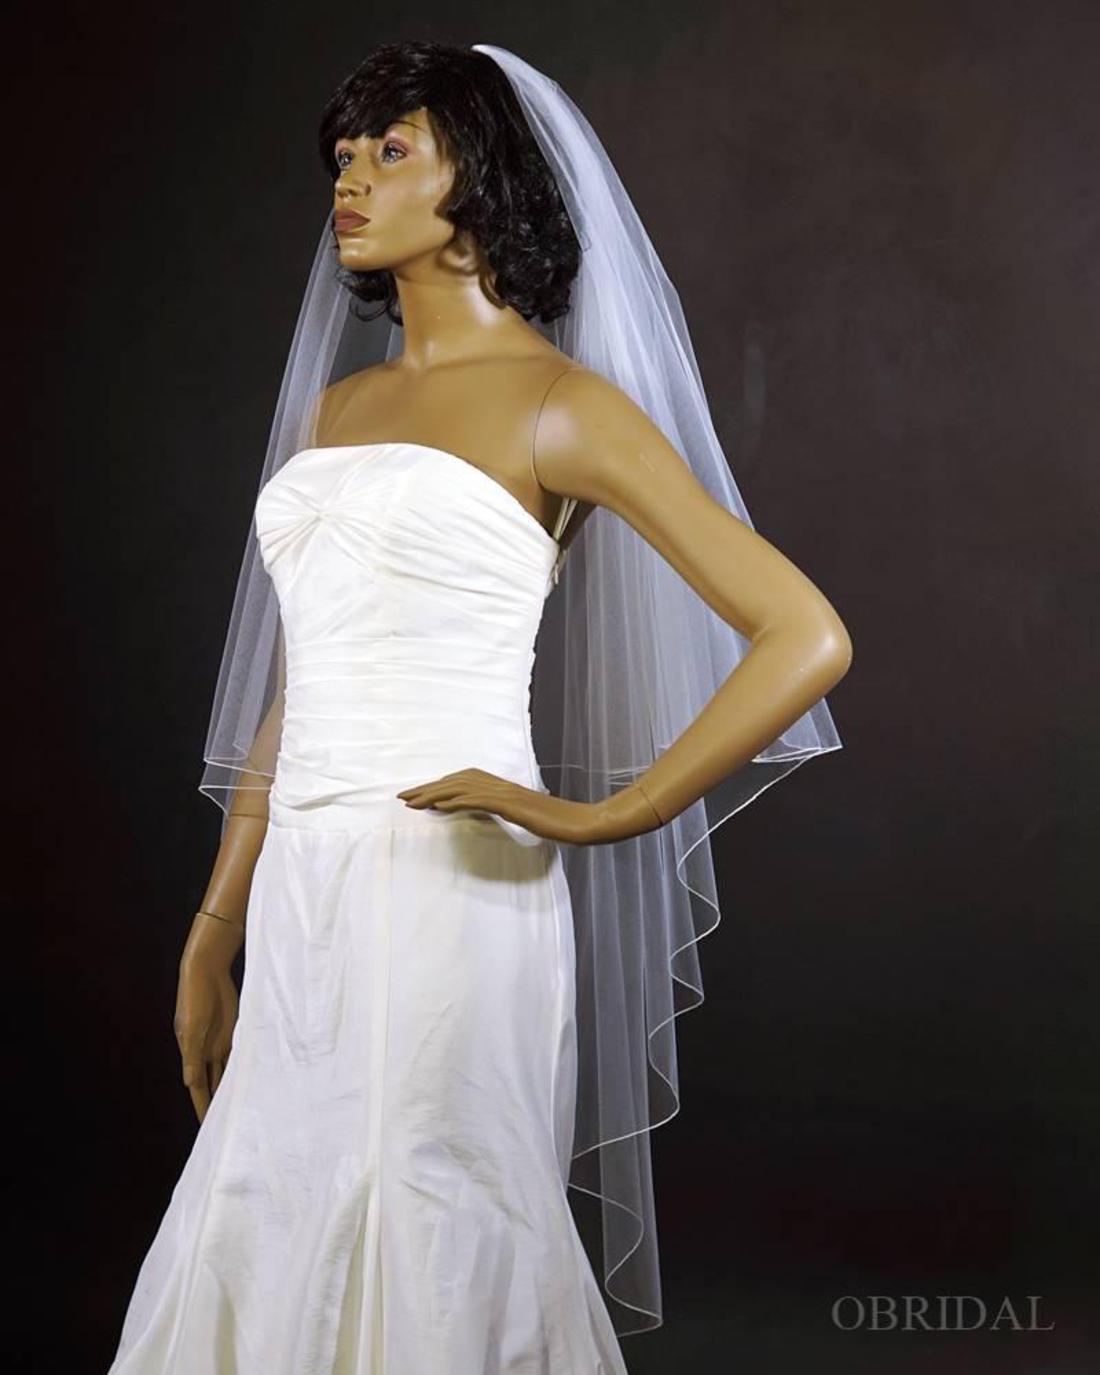 OBRIDAL Custom Wedding Veils - ST2-9659 - 2 Tier Waltz Veil